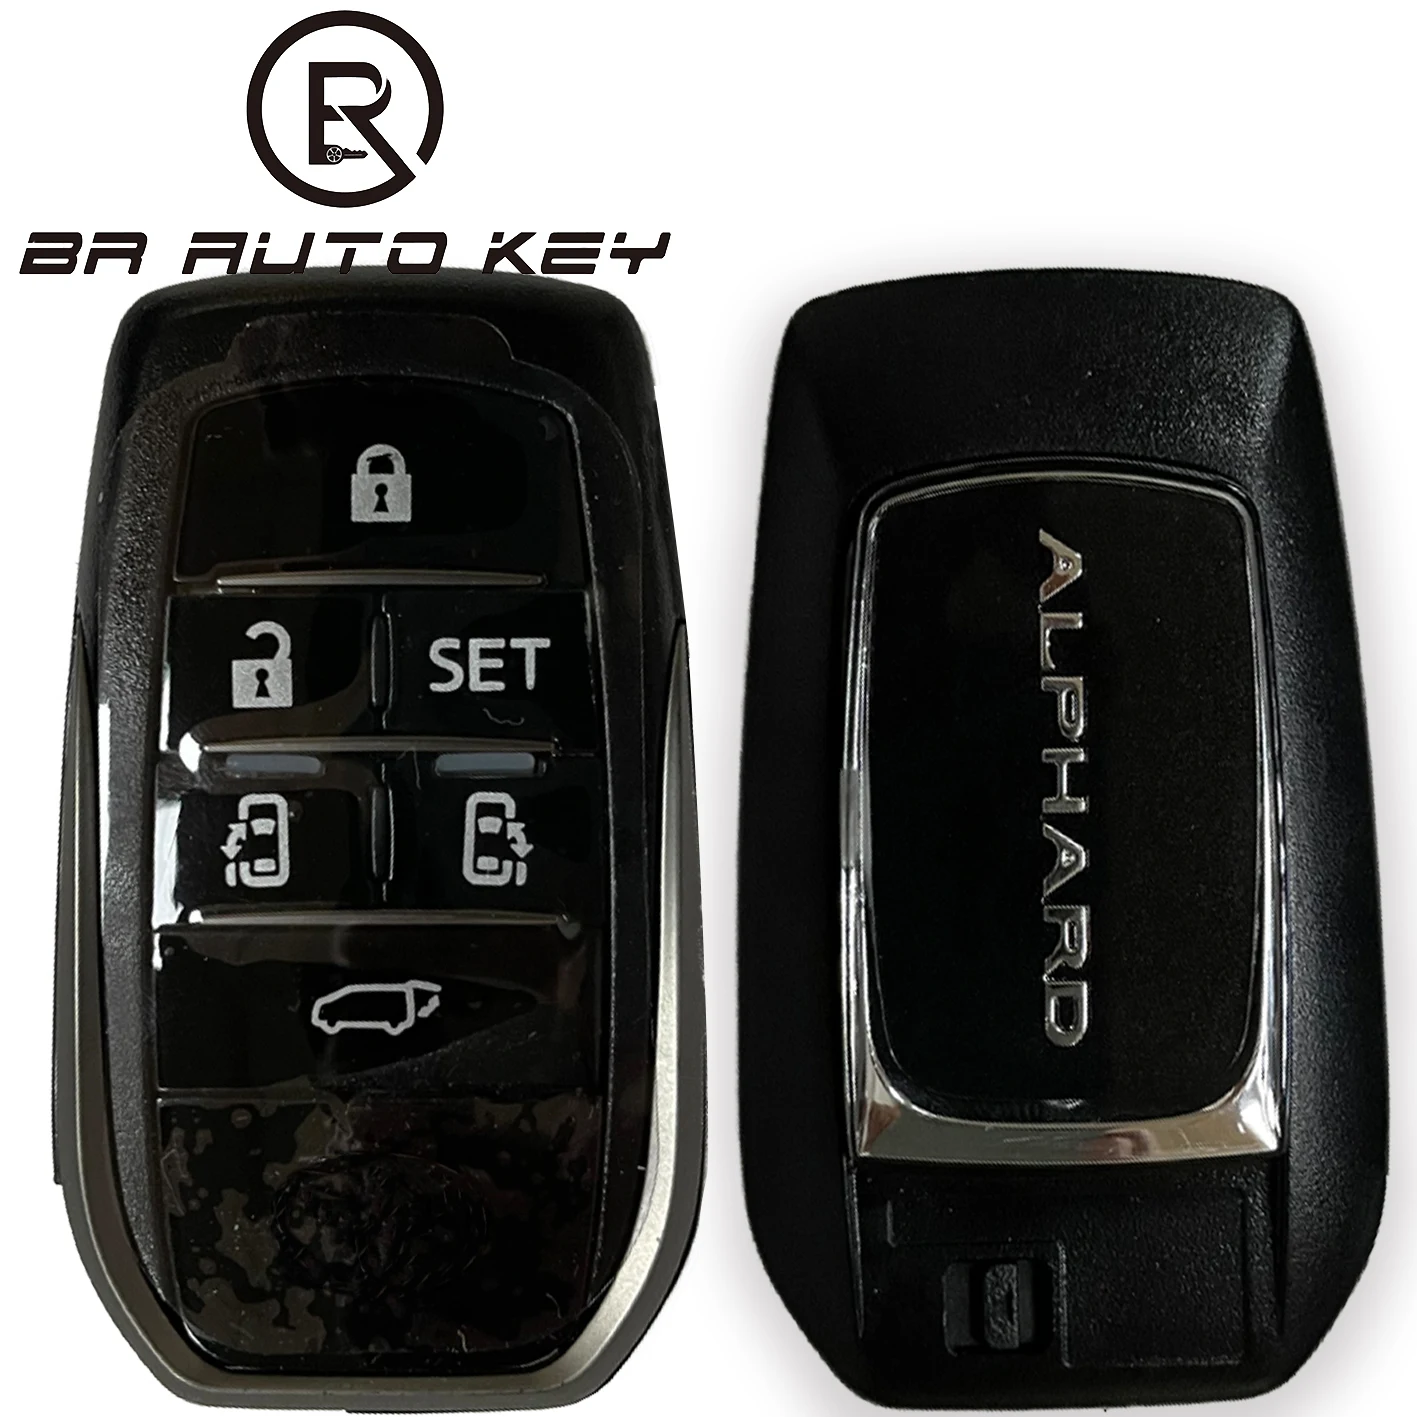 Smart Remote car key For Toyota ALPHARD VELLFIRE 2015 2016 2017 2018 312/314MHZ ID8A H Board No:0120 Keyless-go Smart Remote Key